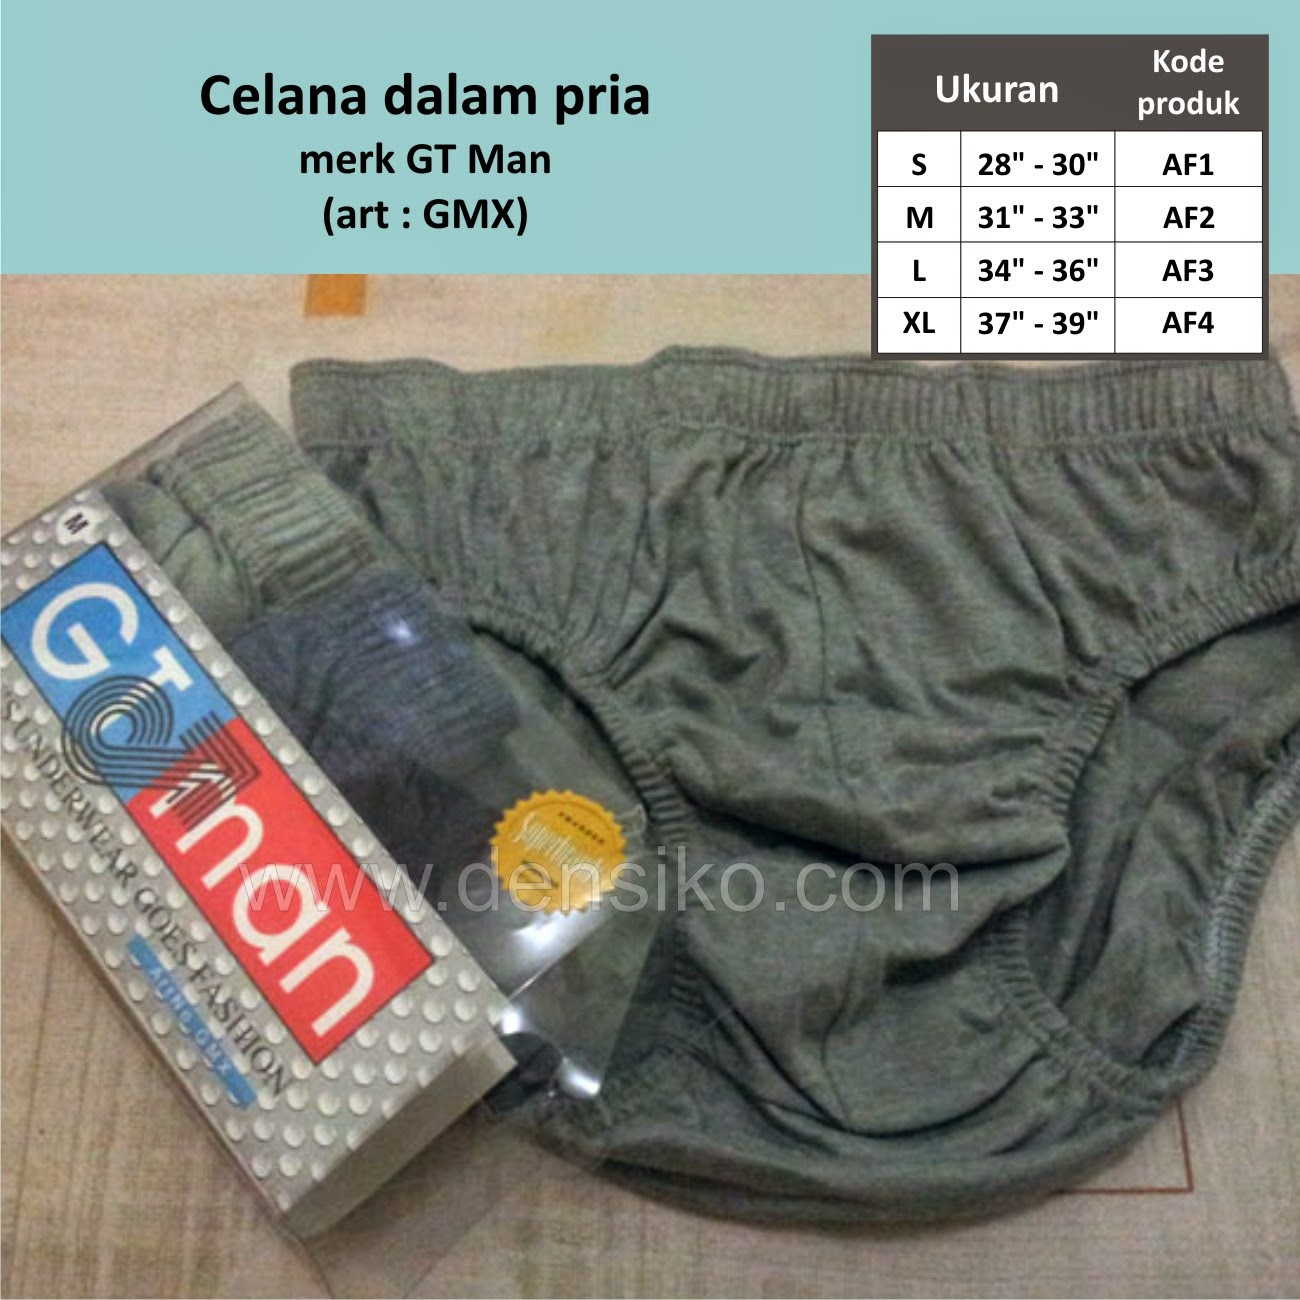 Celana dalam pria GT Man (GMX) jual dengan harga grosir dan ecer termurah, merk GT-Man sudah terkenal kualitasnya, untuk kode art: GMX